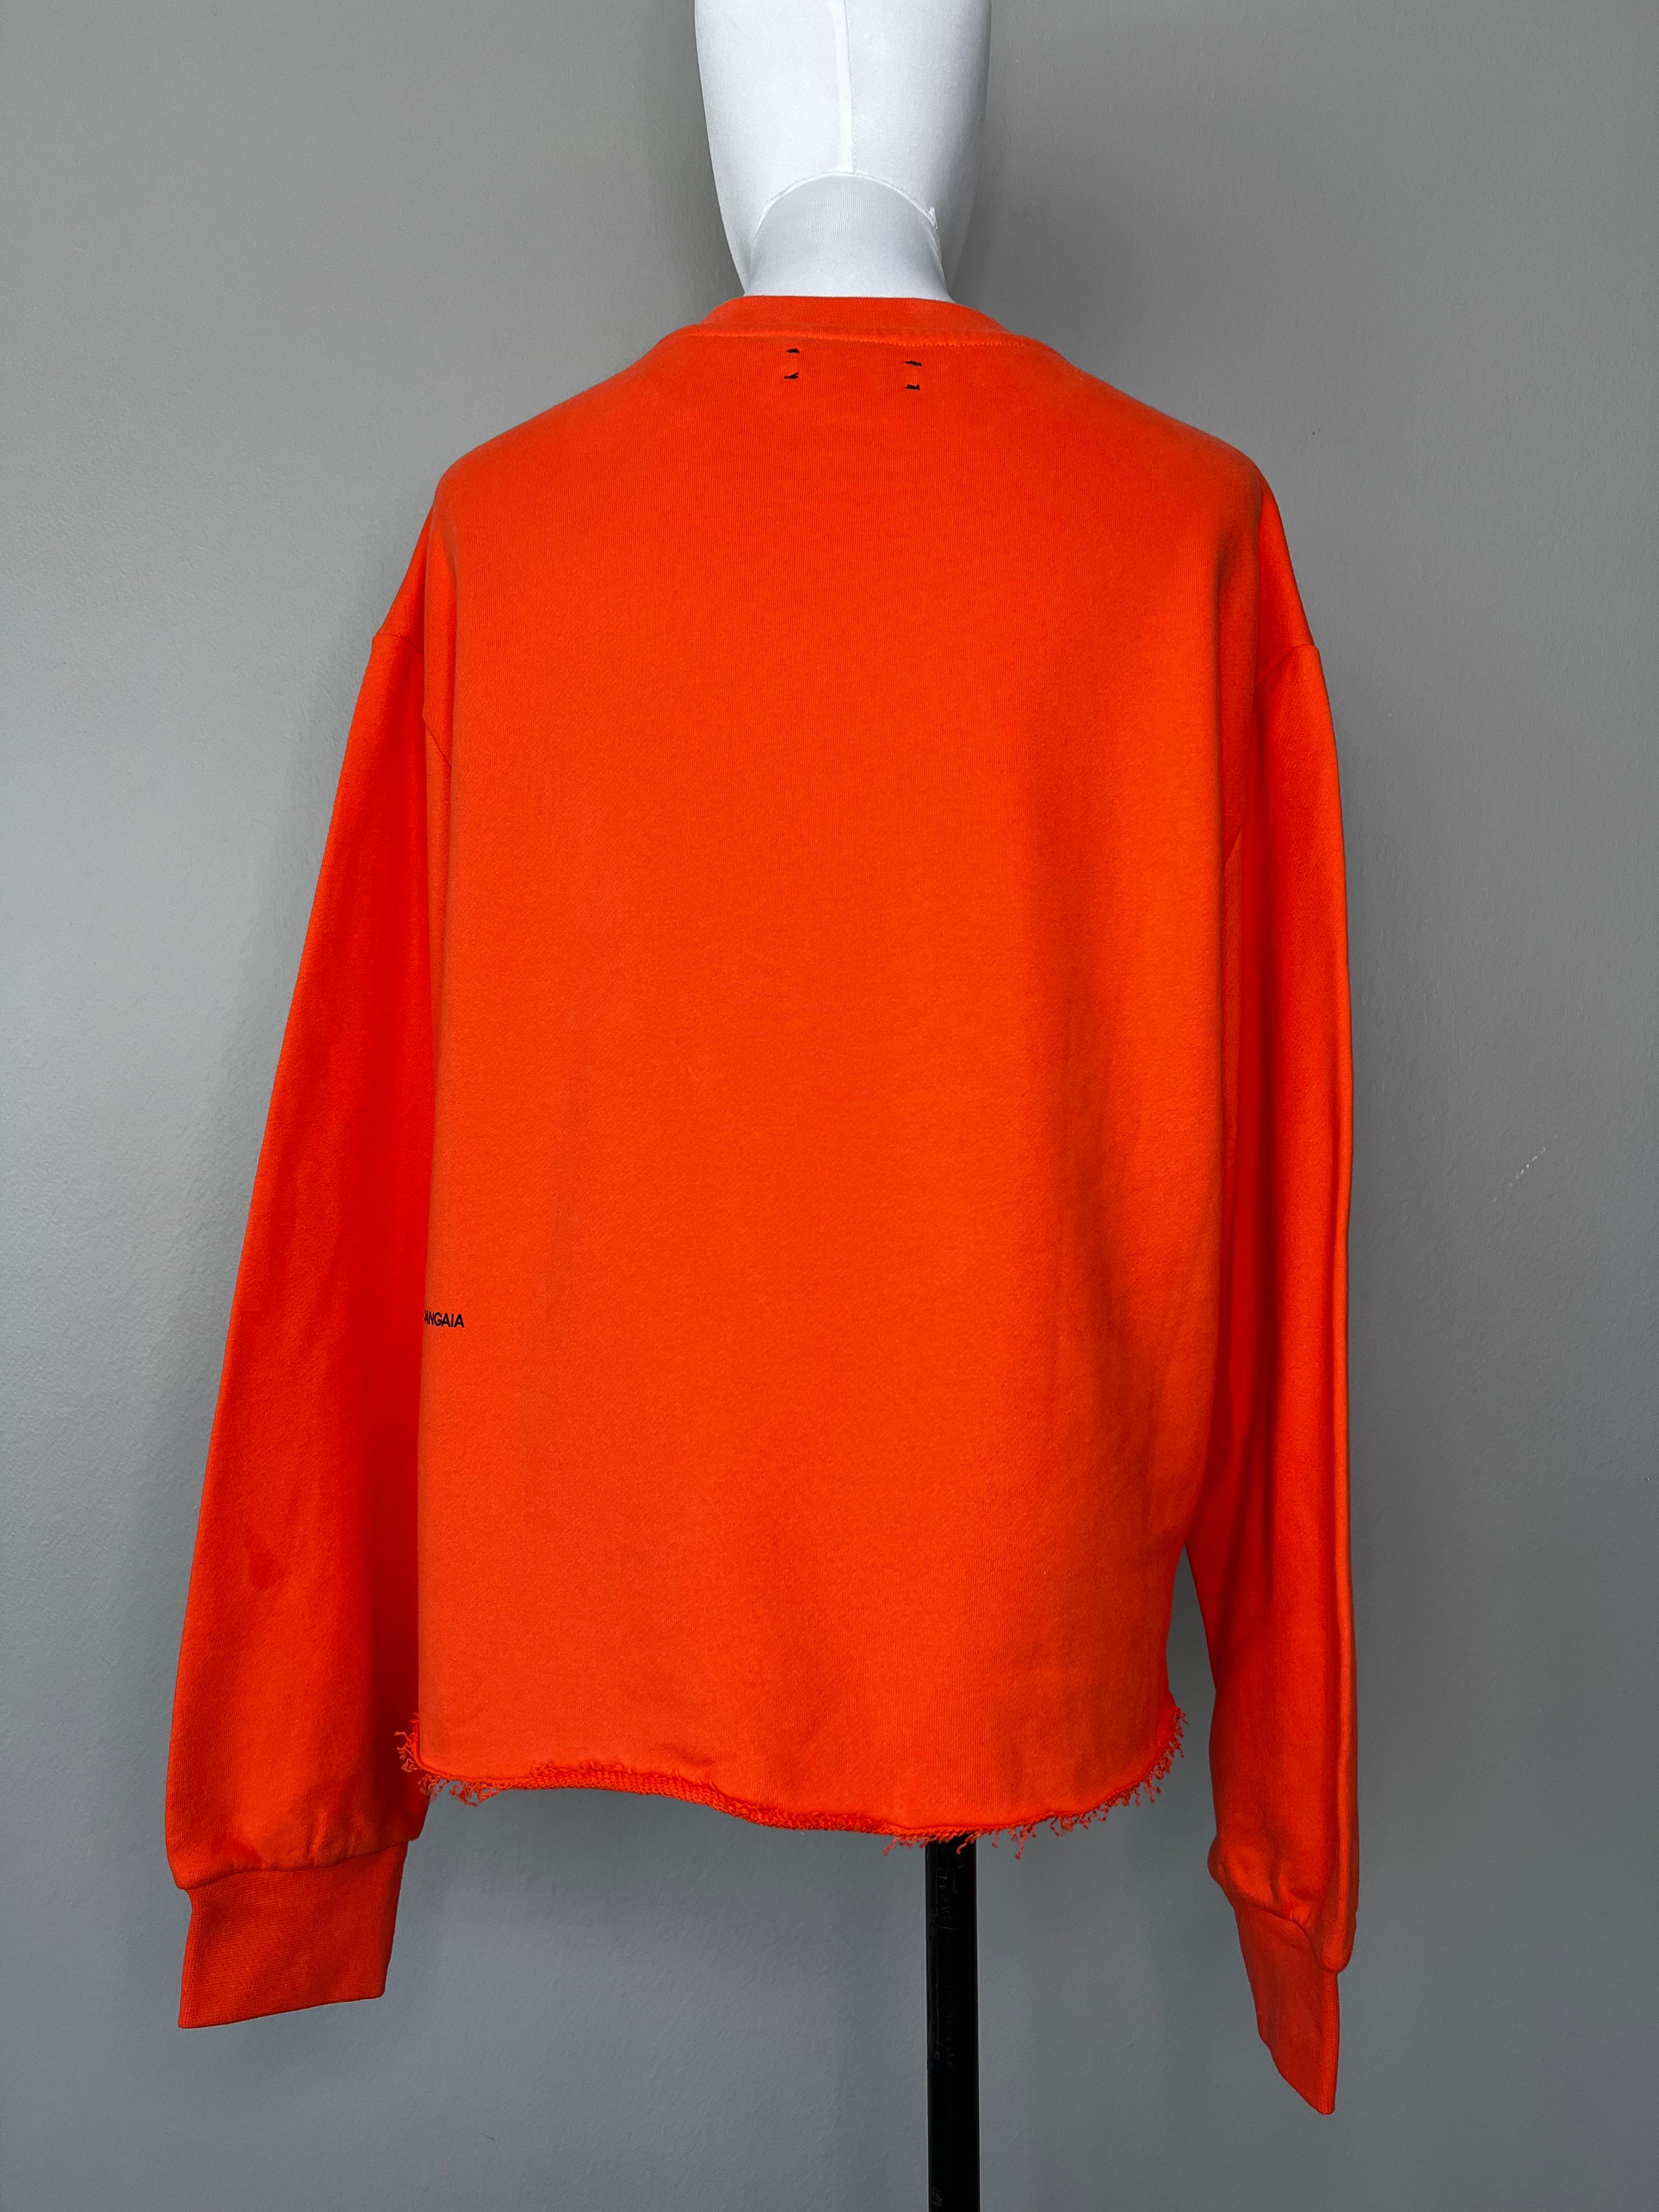 Orange plain comfy sweater - PANGAIA